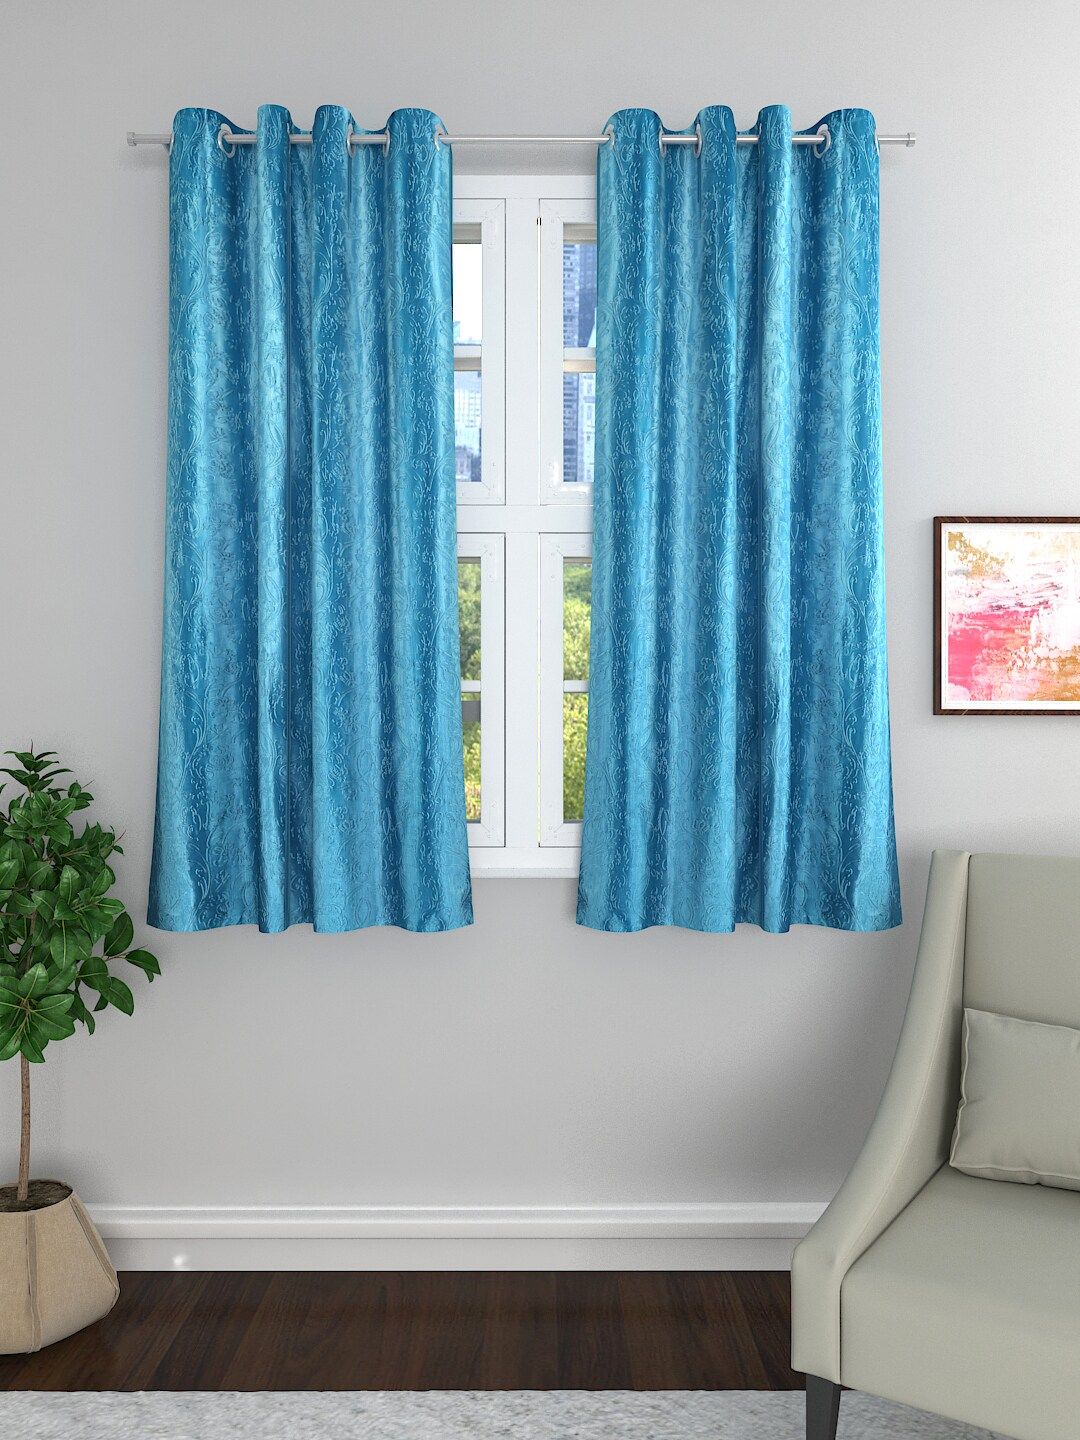 ROMEE Turquoise Blue Set of 2 Room Darkening Window Curtains Price in India